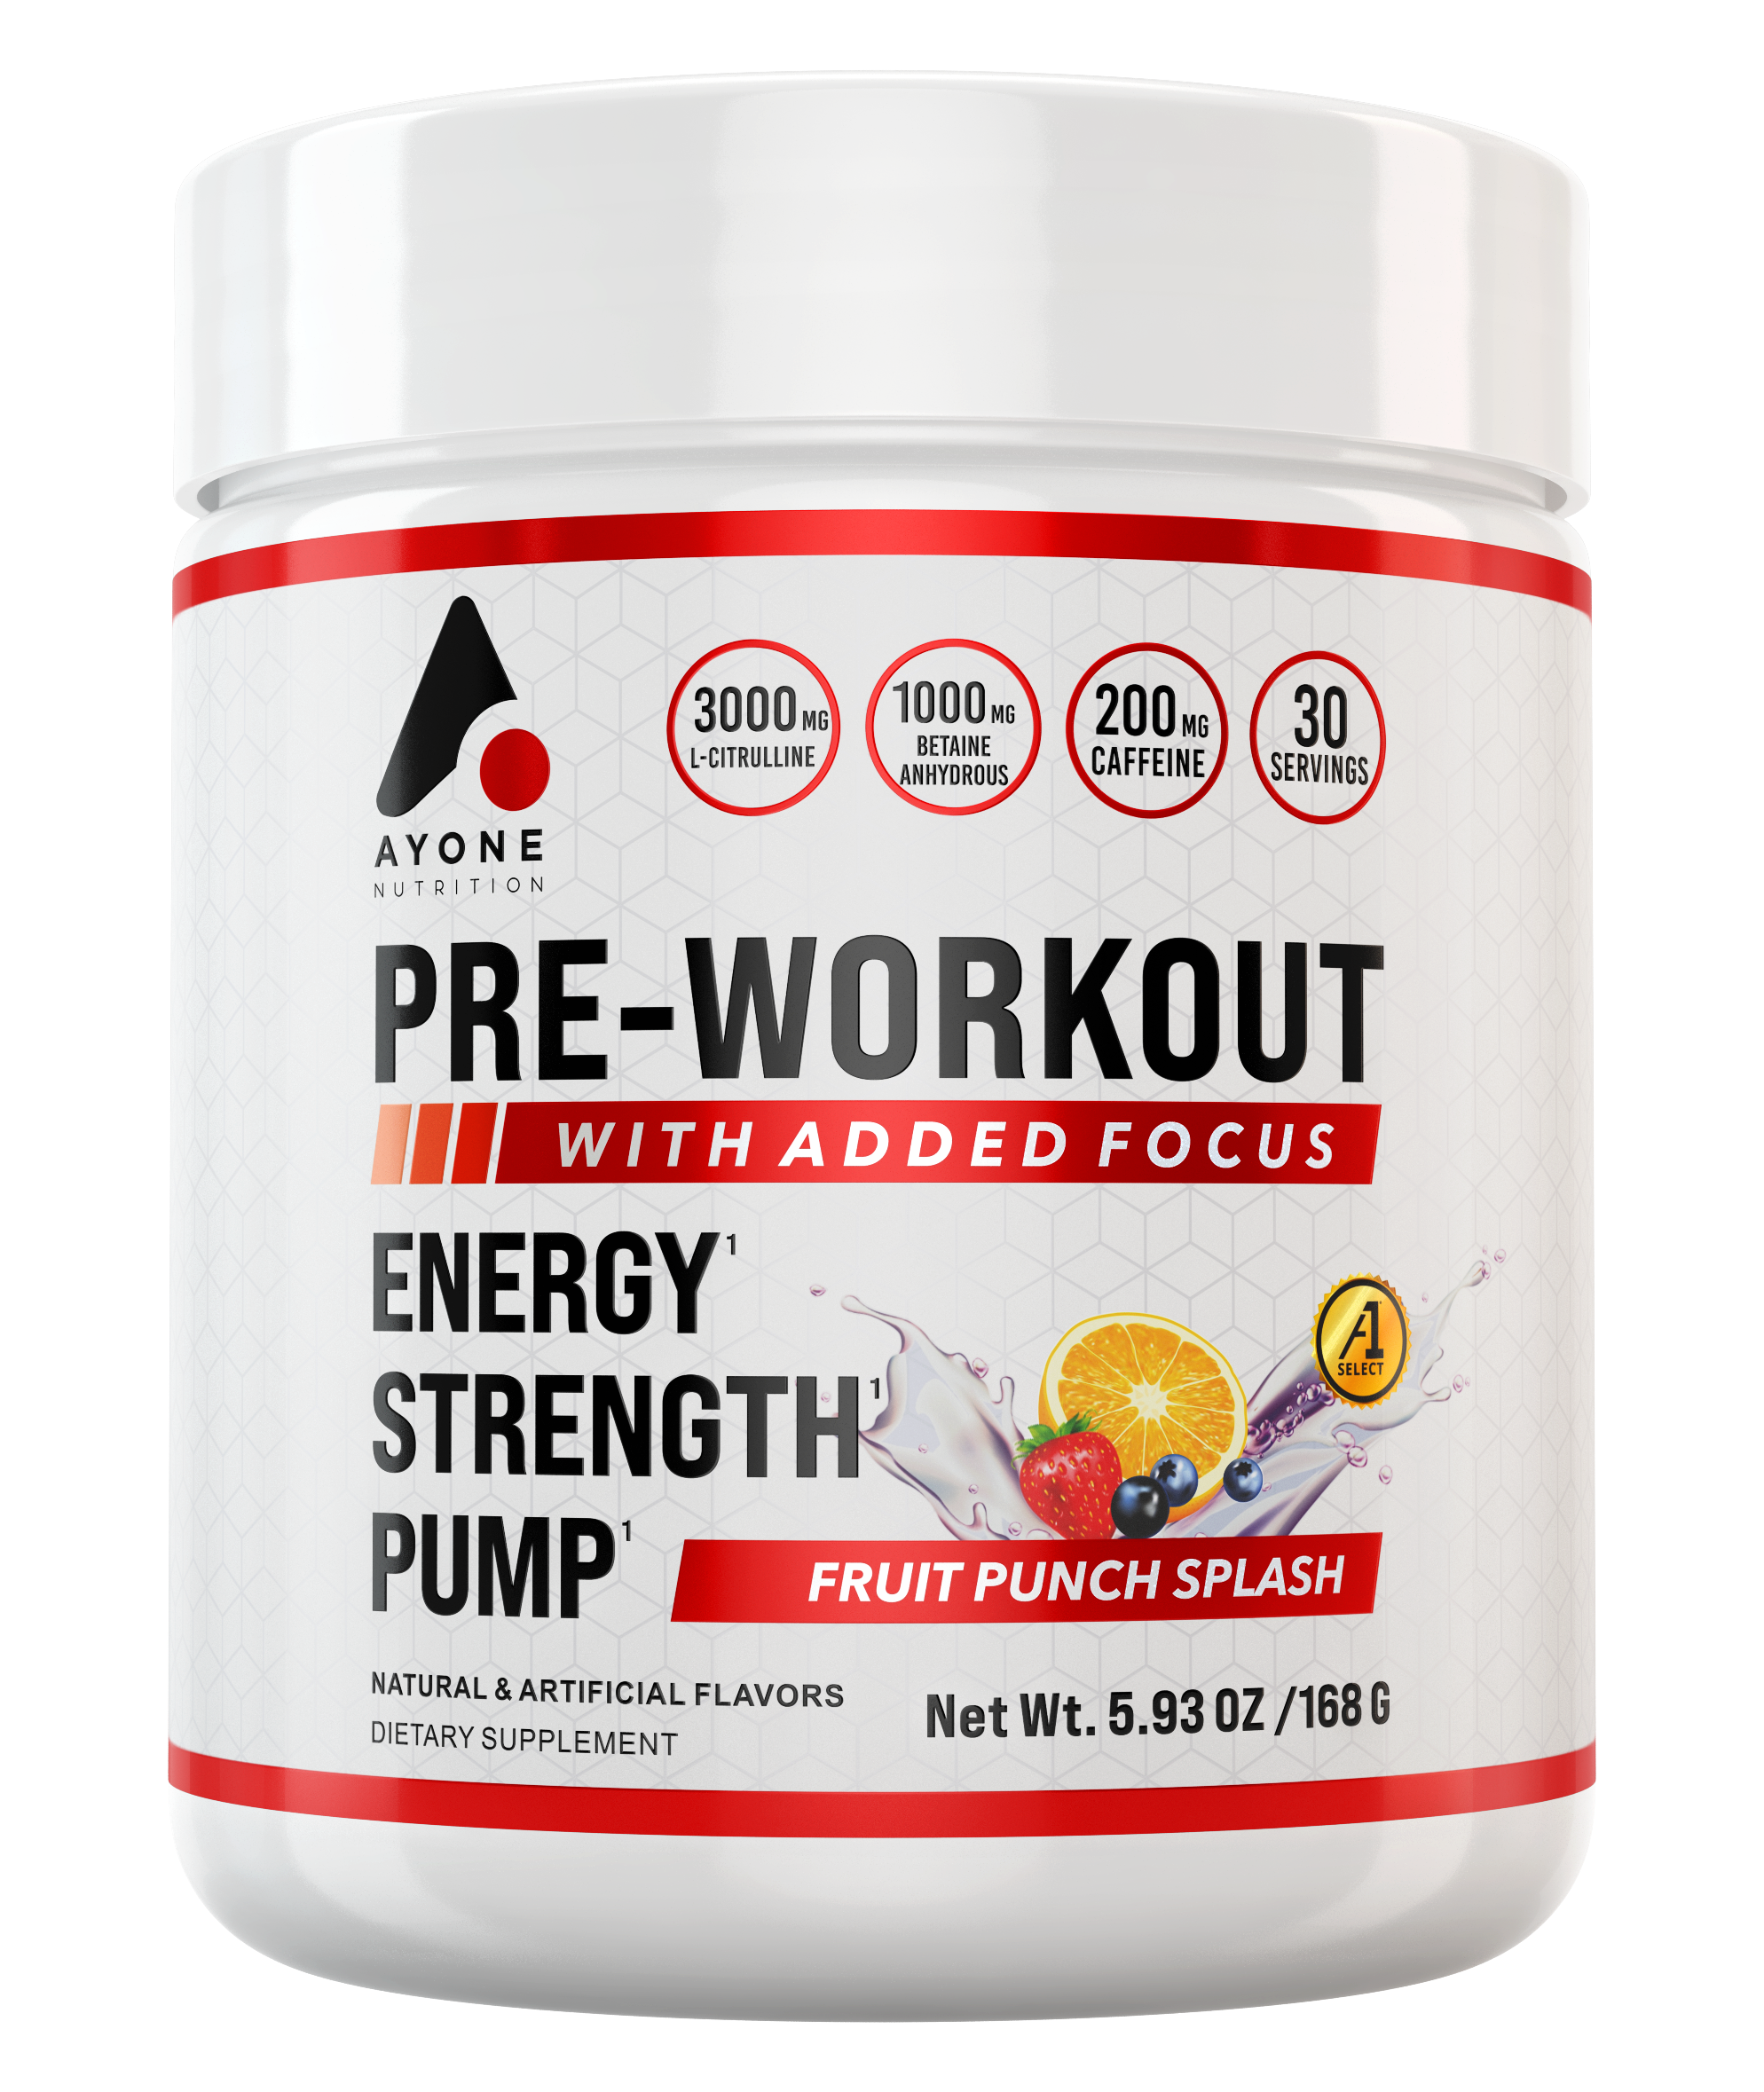 Ayone Nutrition Pre-Workout - Fruit Punch Splash